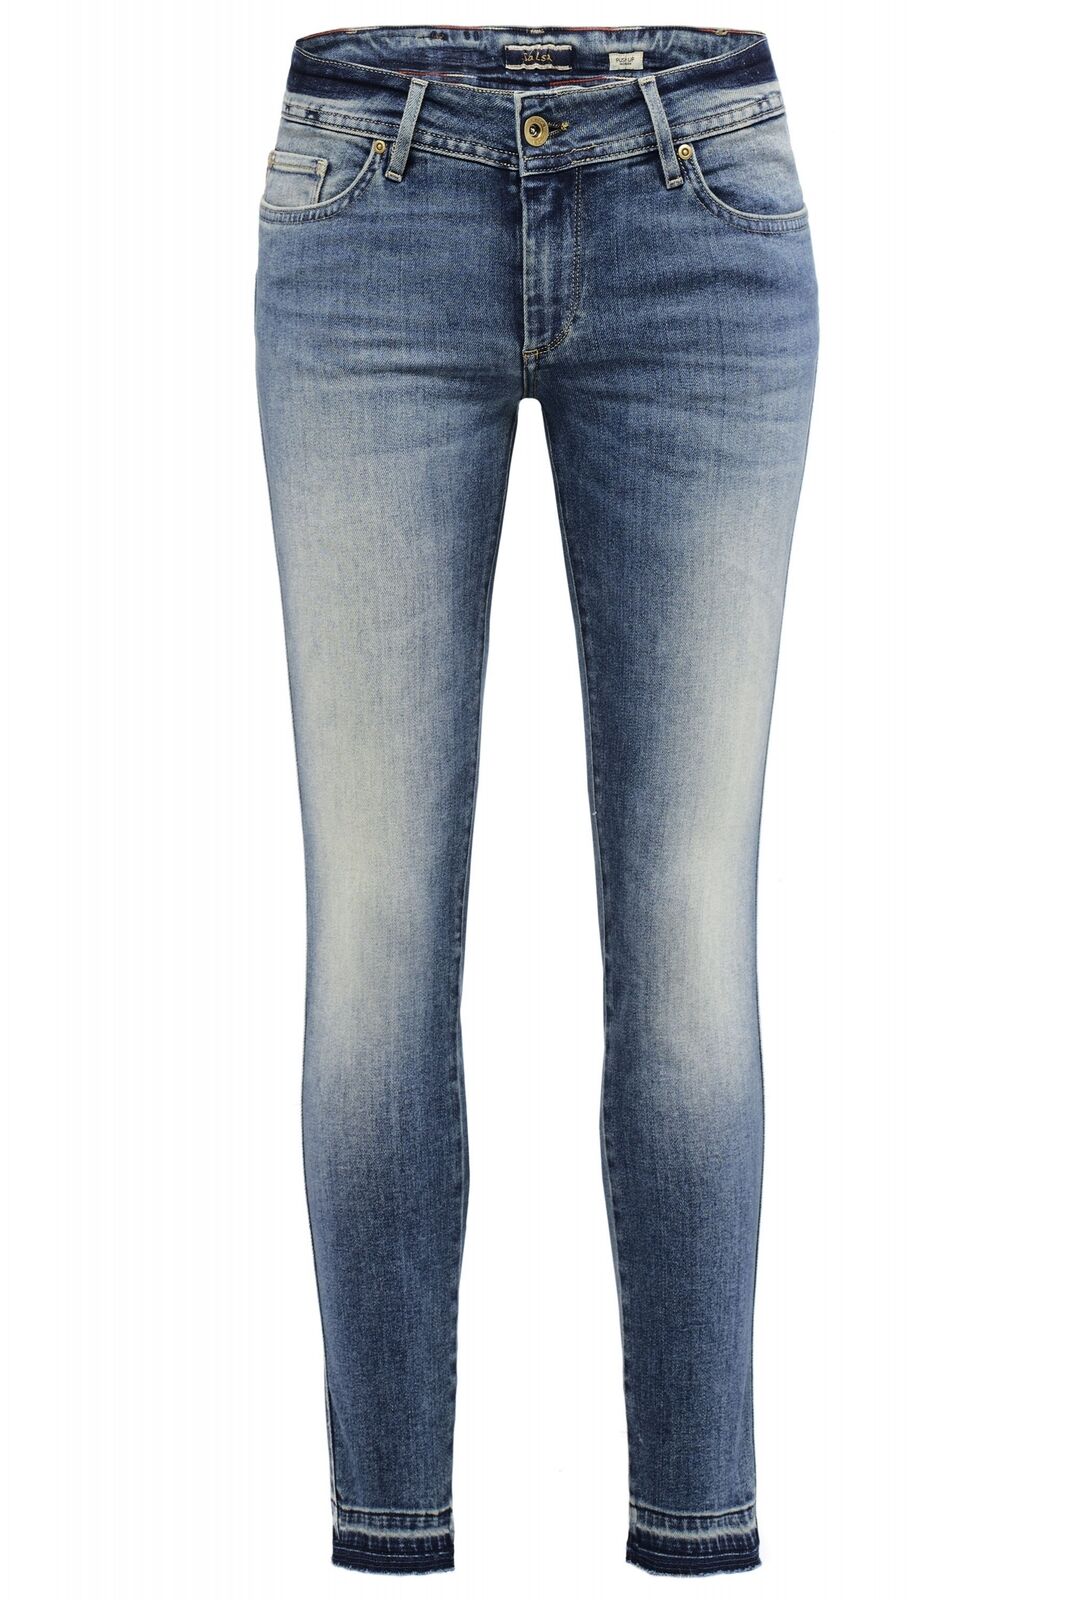 SALSA JEANS WONDER PUSH UP CAPRI blue vintage 121994.8502 - Slim Fit Jeans Damen